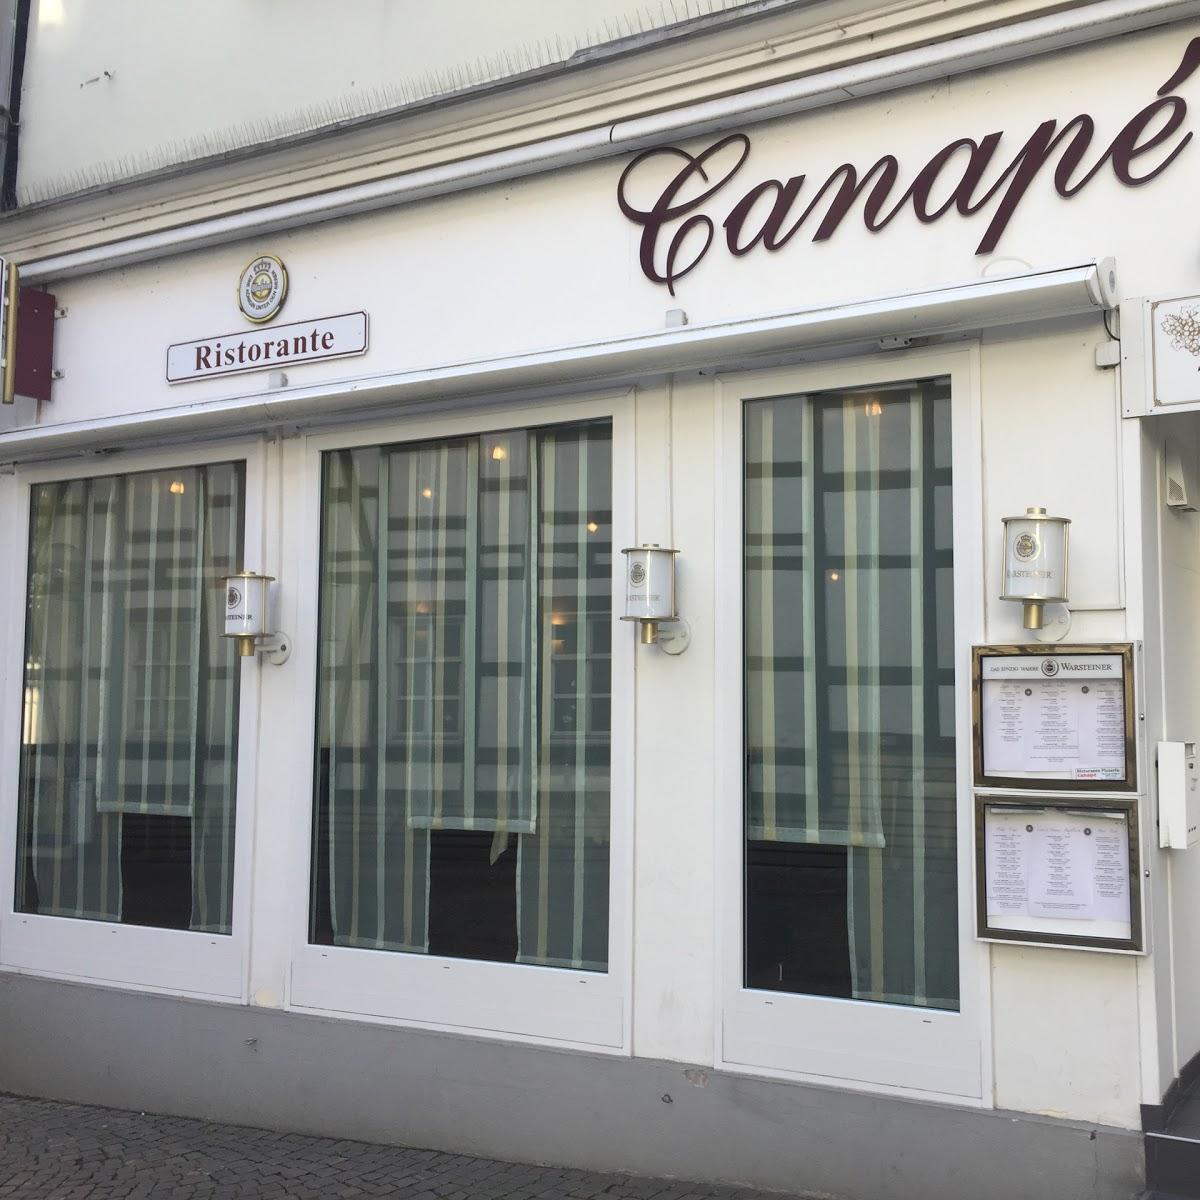 Restaurant "Canapé" in  Unna